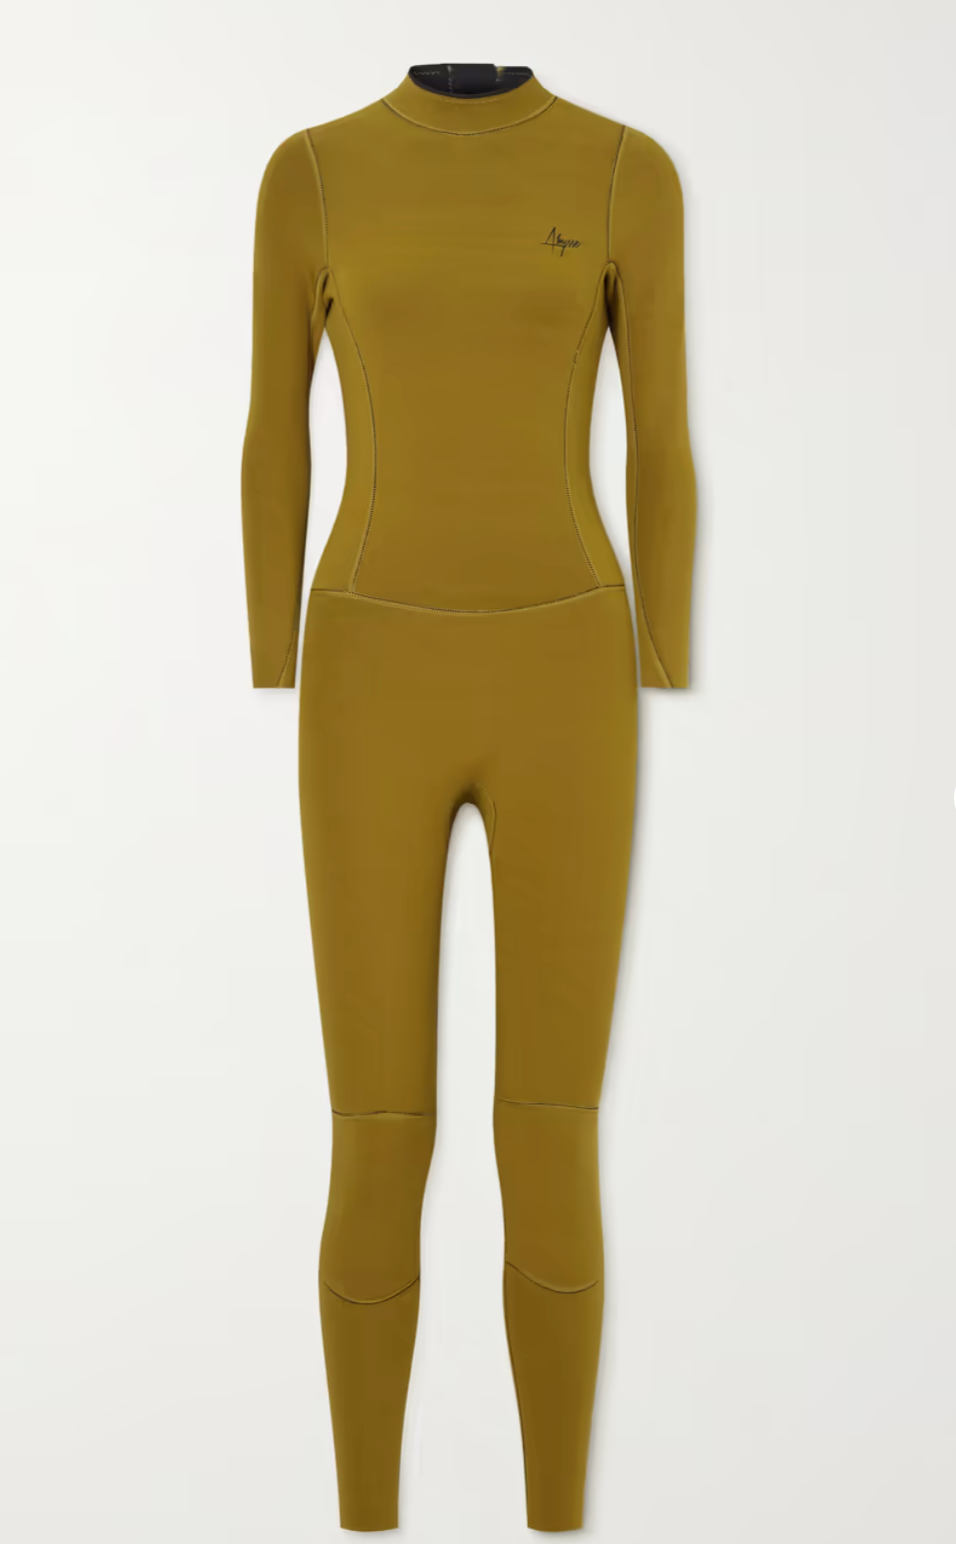 Clark  Womens Full Wetsuit - Lilac 2mm Eco Neoprene Surf Suit